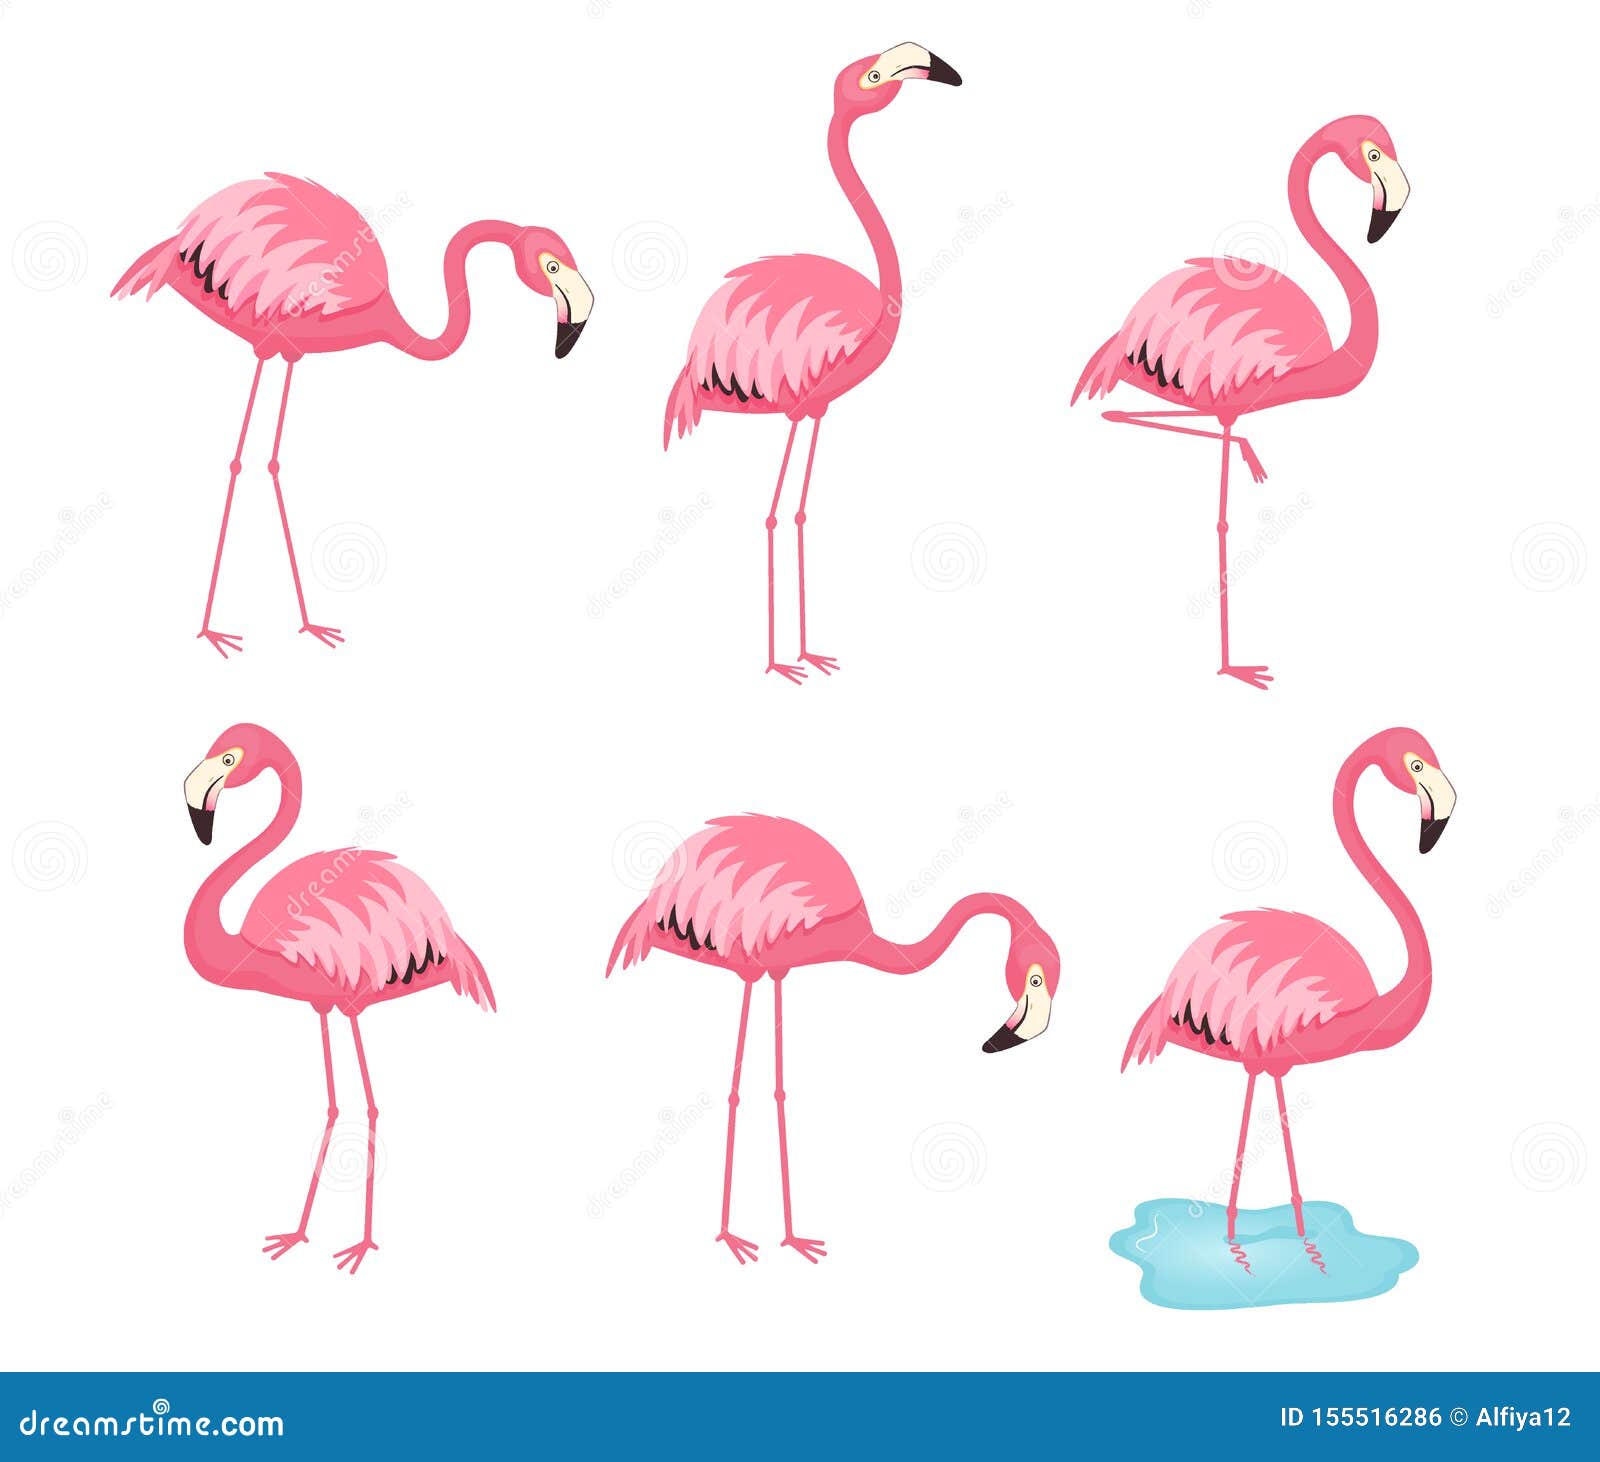 Collection of Pink Vector Flamingos. Cartoon Illustration Stock Vector ...